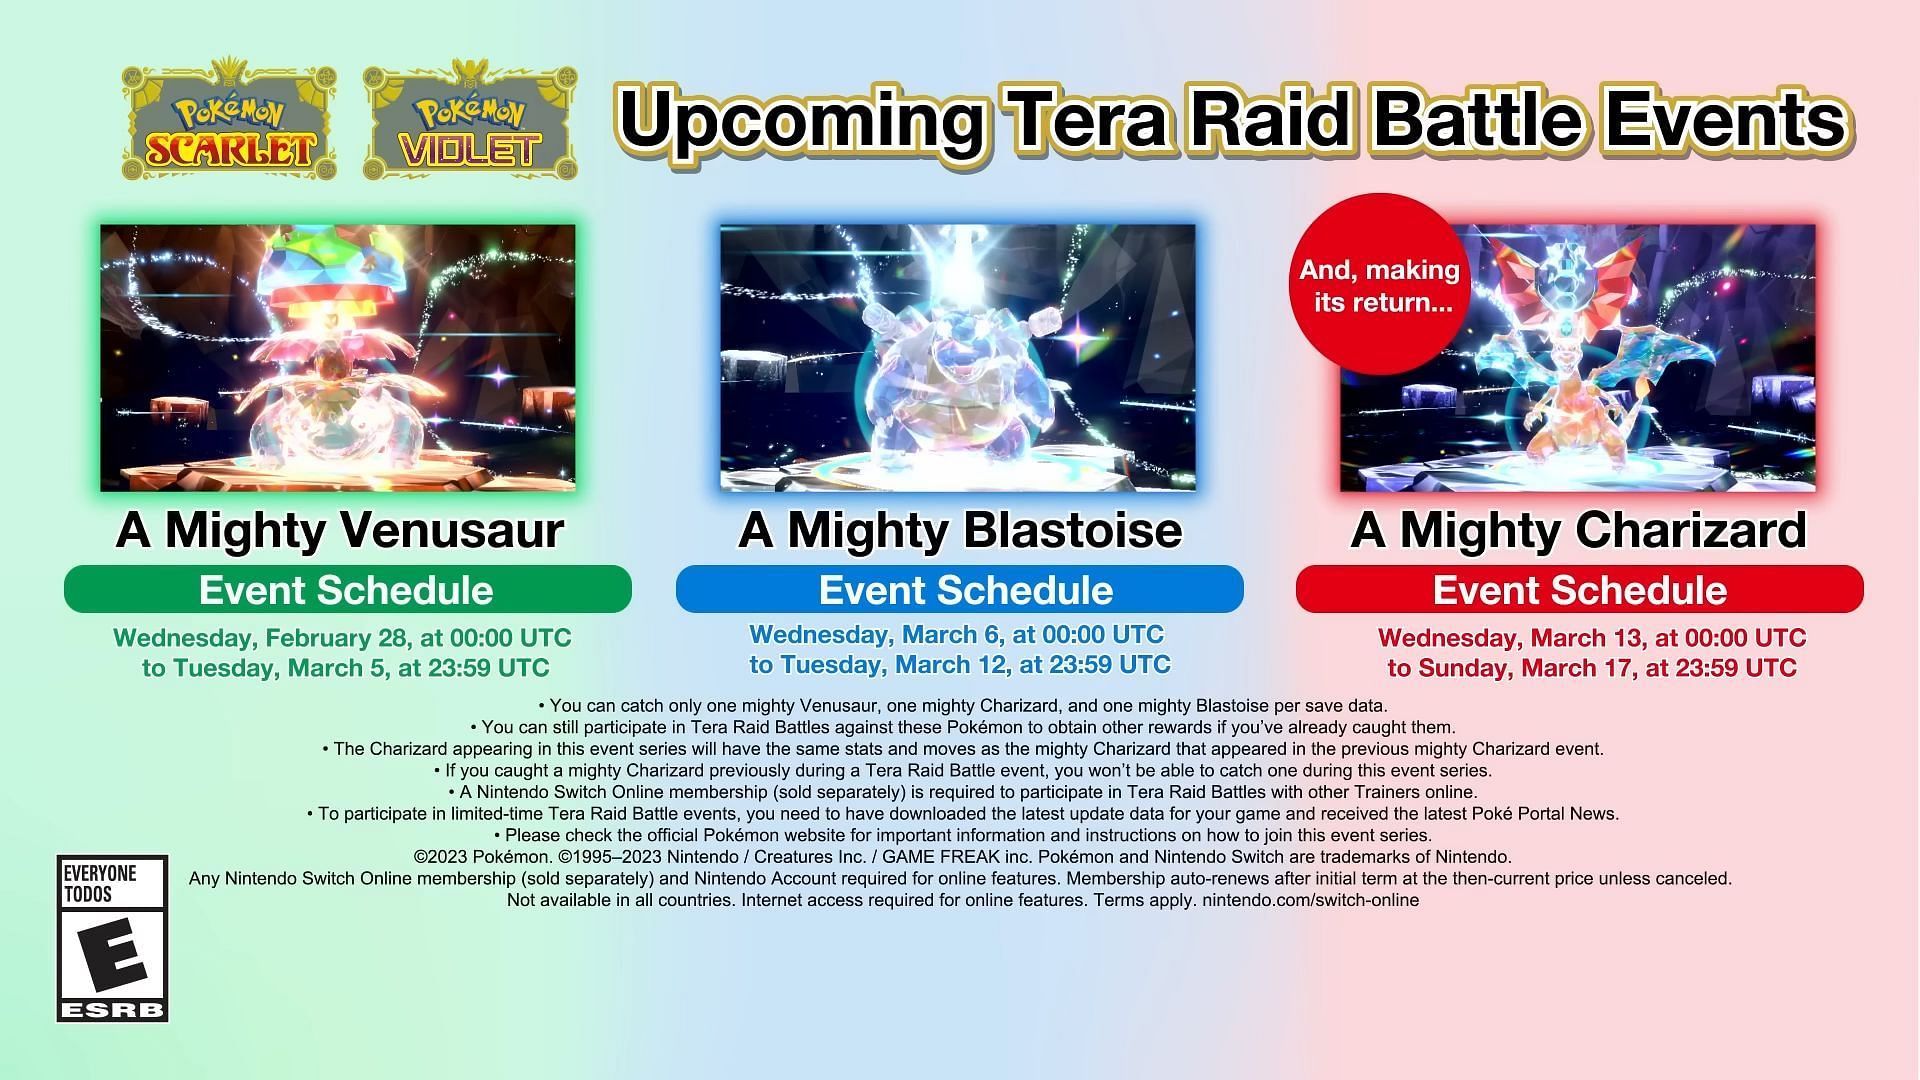 Tera Dragon Charizard will be making its return starting on March 13th (Image via The Pokemon Company)